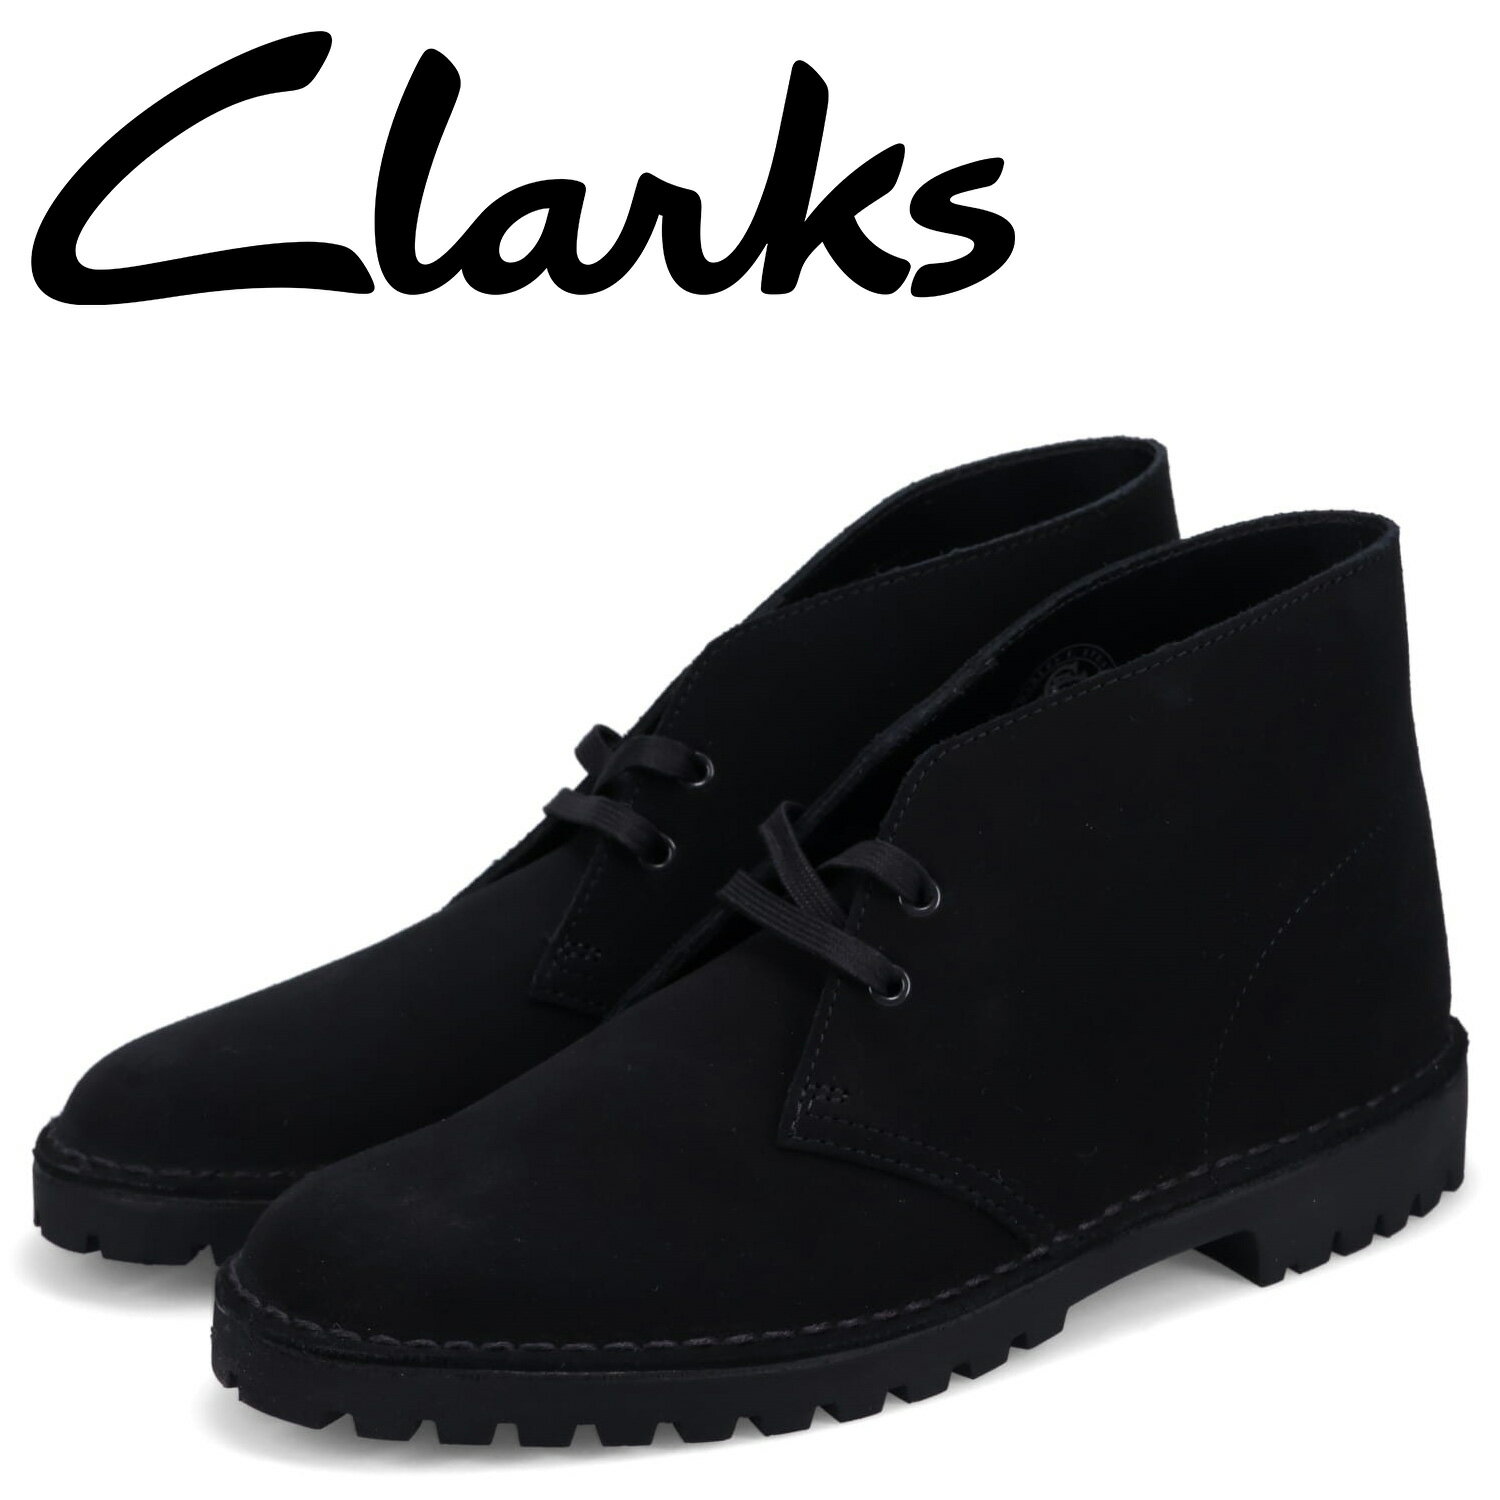 Clarks DESERT ROCK クラークス デザート ロック ブーツ メンズ スエード ブラック 黒 26162705